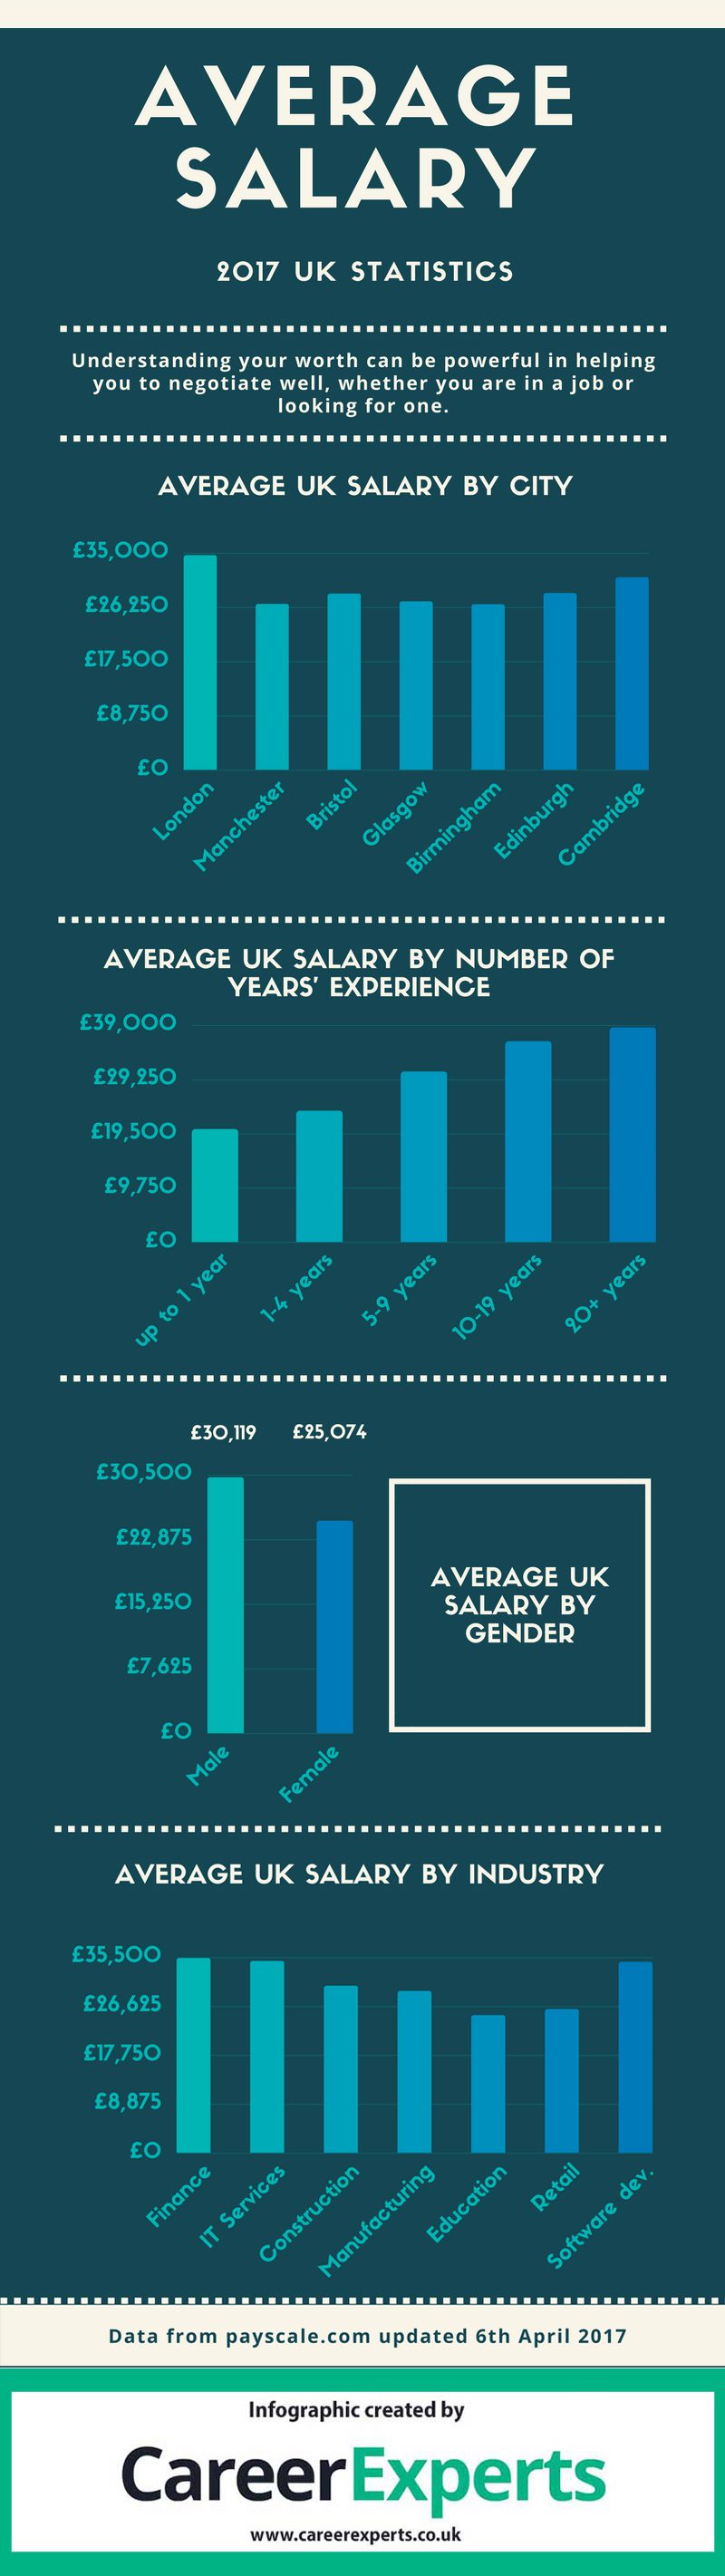 salary statistics 2017 infographic